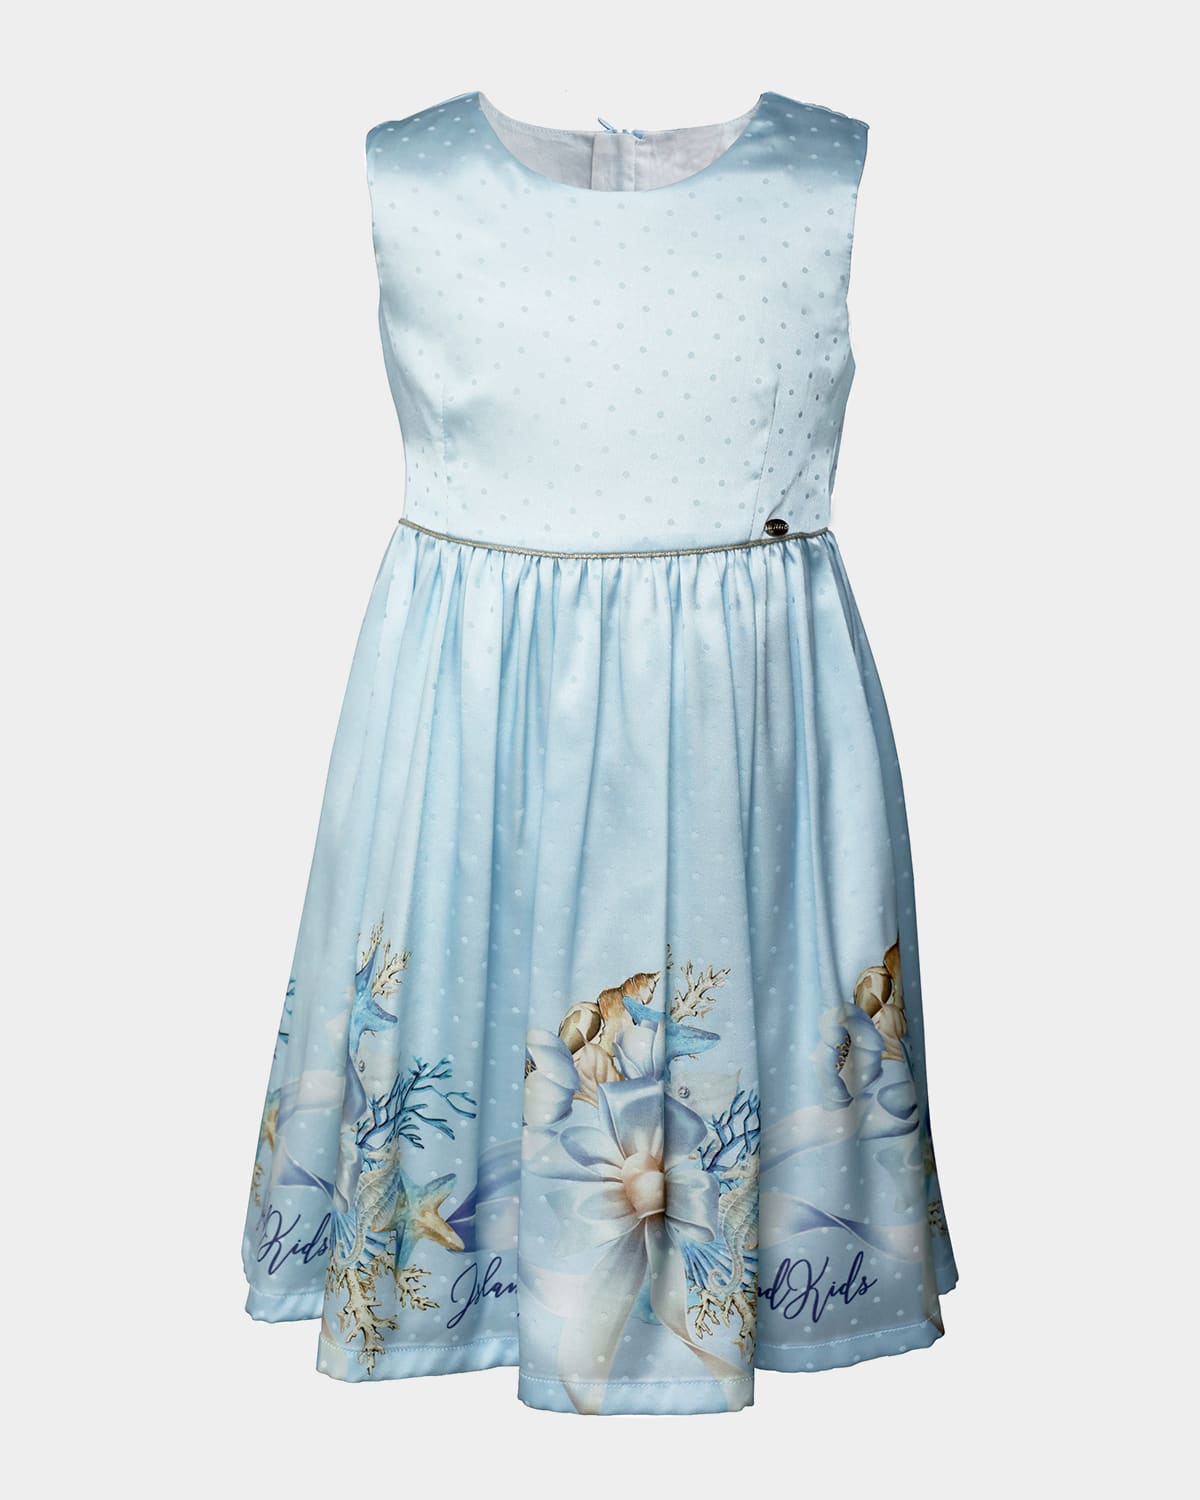 Island Kids & Kids Isle Girl's Floral-Print Sleeveless Dress, Size 4-12